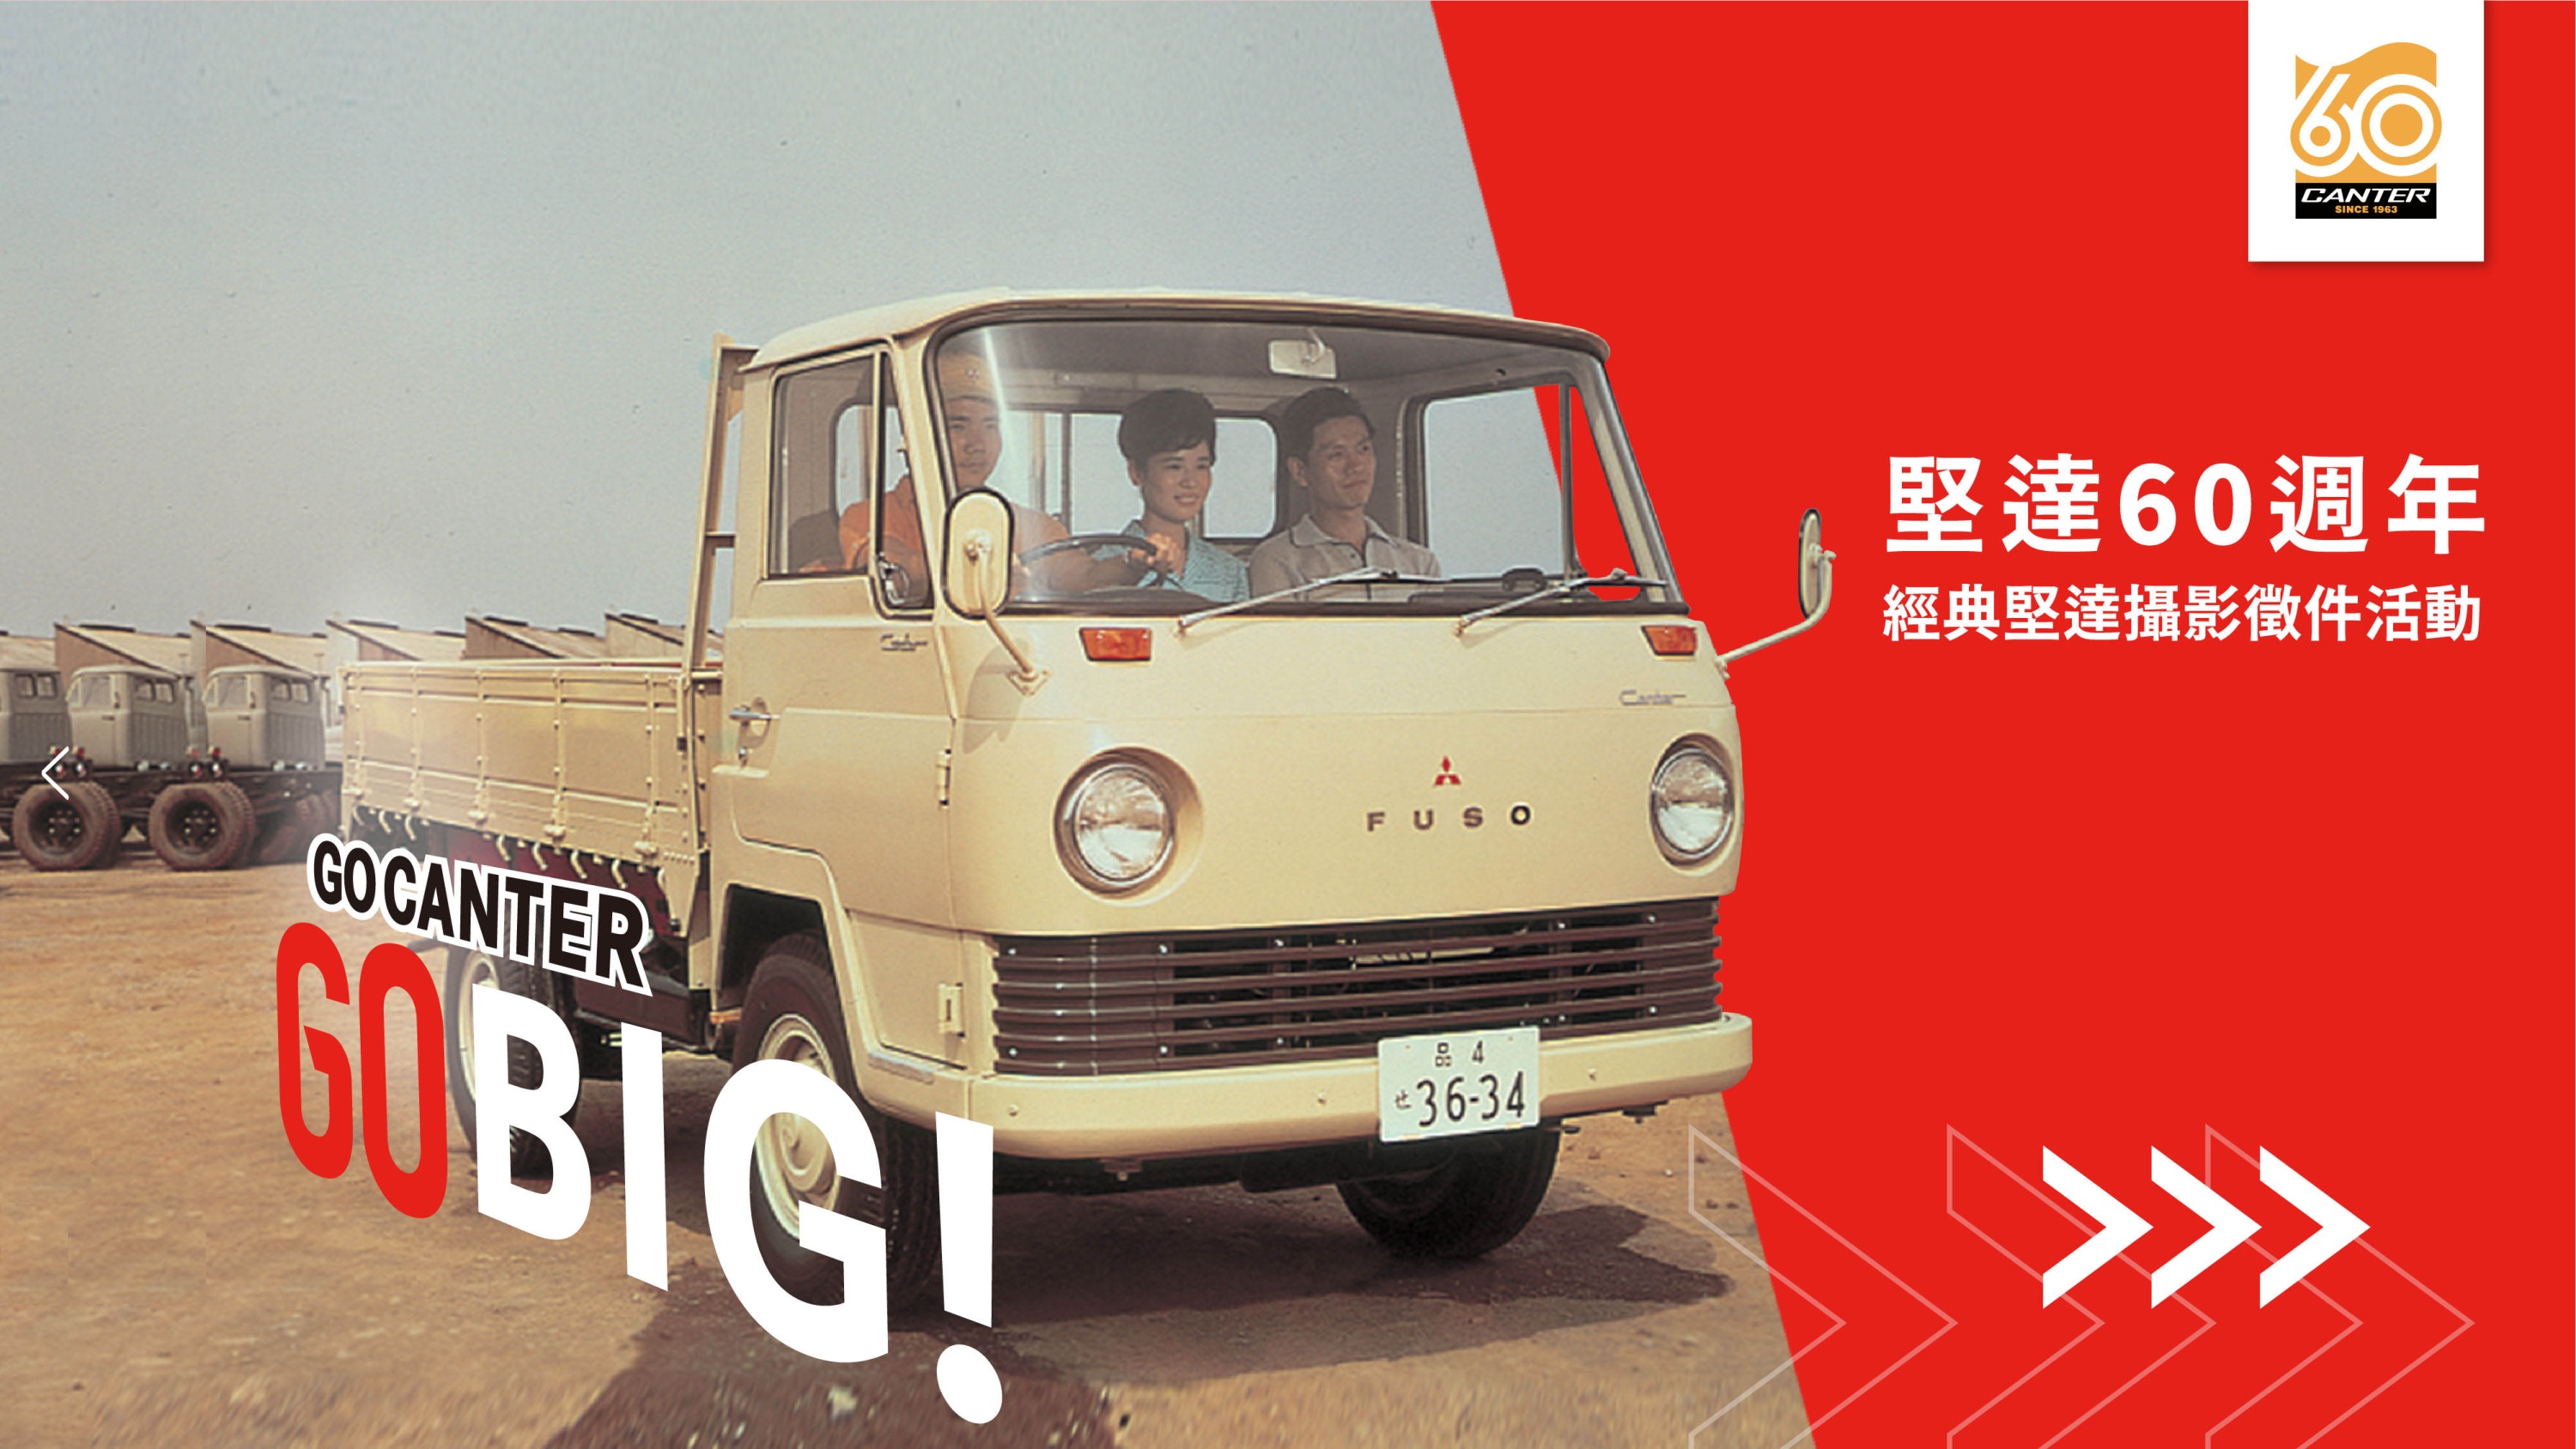 DTAT歡慶Canter 60周年系列活動「Go Canter, Go Big 60週年攝影募集」正式起跑，完成任務將有機會獲得台北東京雙人來回機票（圖由DTAT提供）.jpg